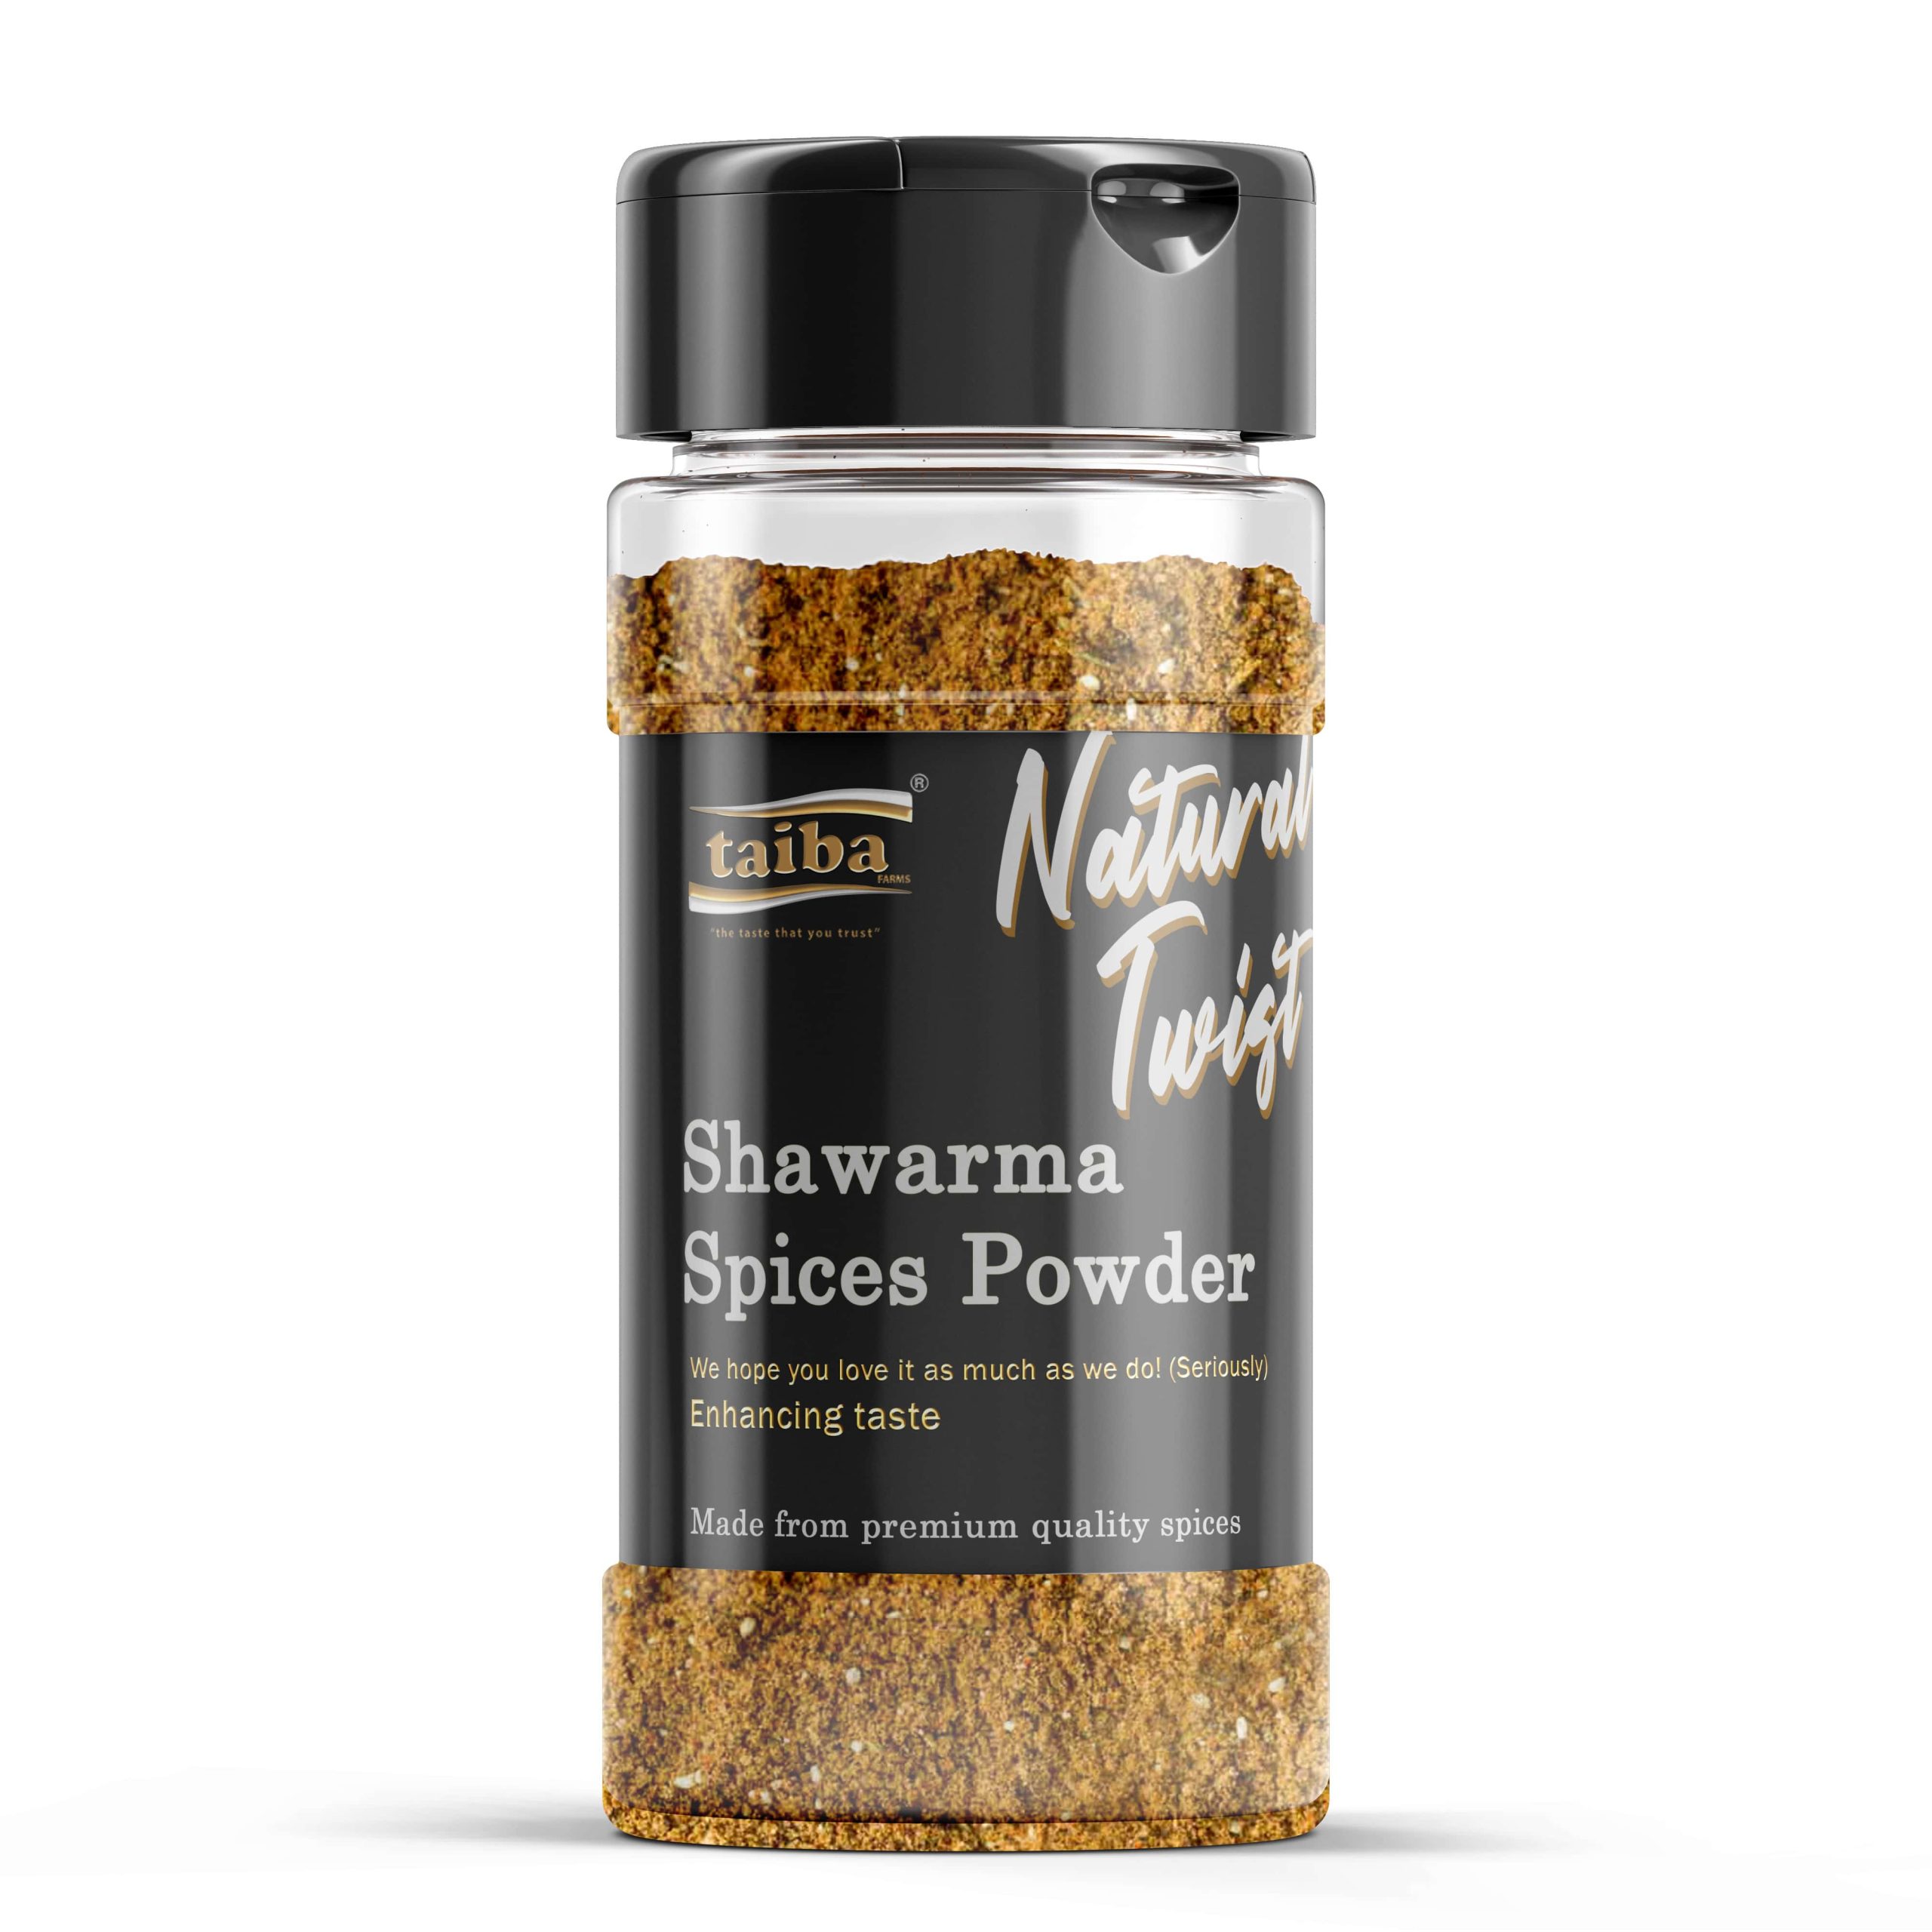 Shawarma-Spices-online-grocery-hearps-and-spices-online-suppliers-in-USA-New-york-Saudi-arabia-Qatar-UAE-Dubai-Jordan-Egypt-Cairo